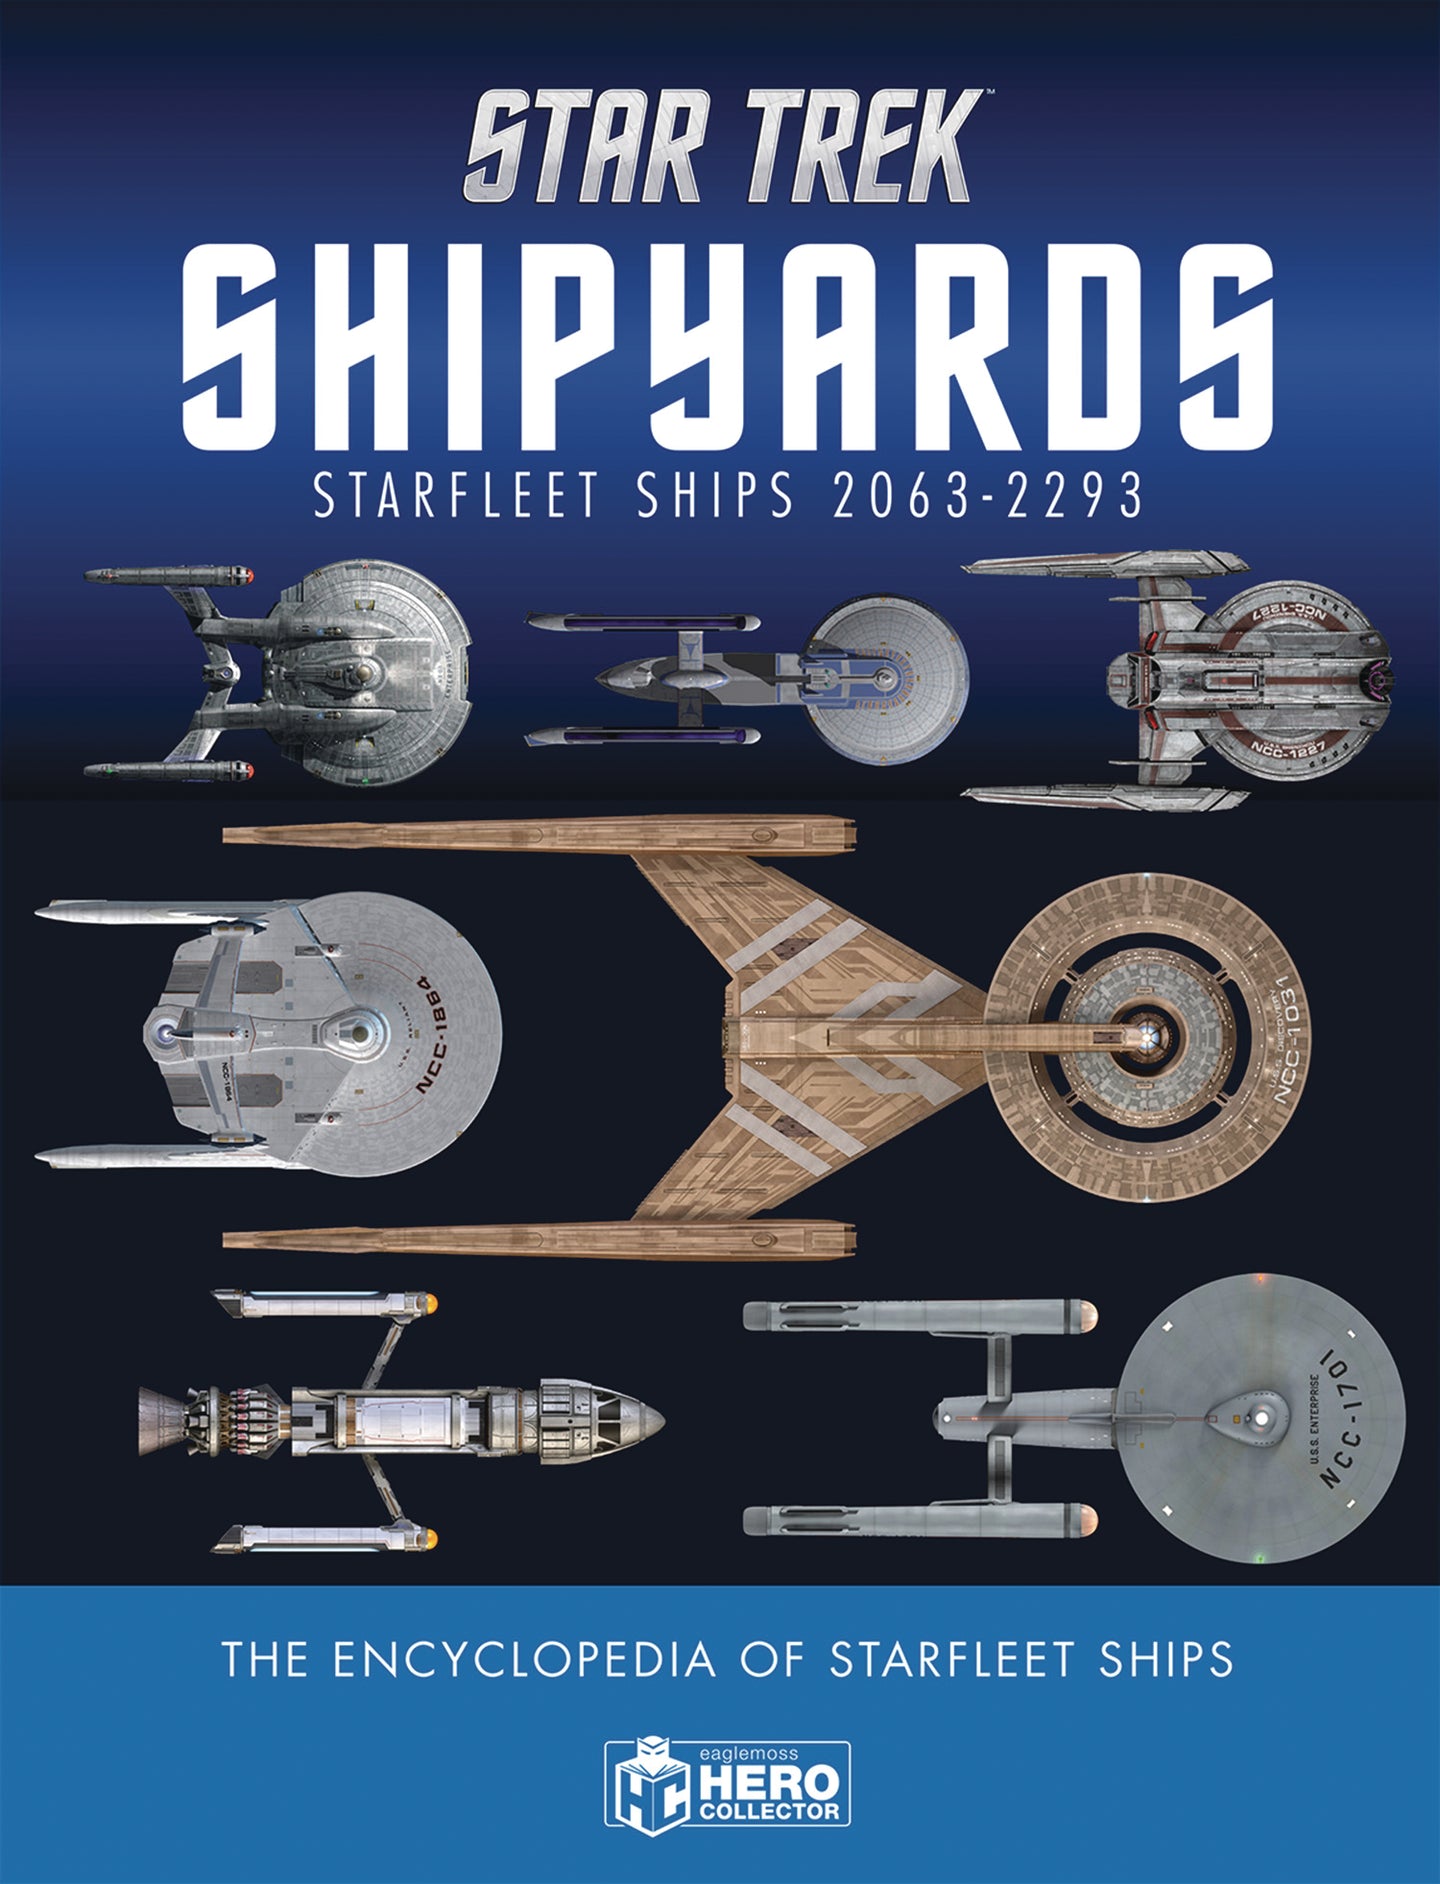 Star Trek Encyclopedia Starfleet Starships 2063 - 2293 With Collectible